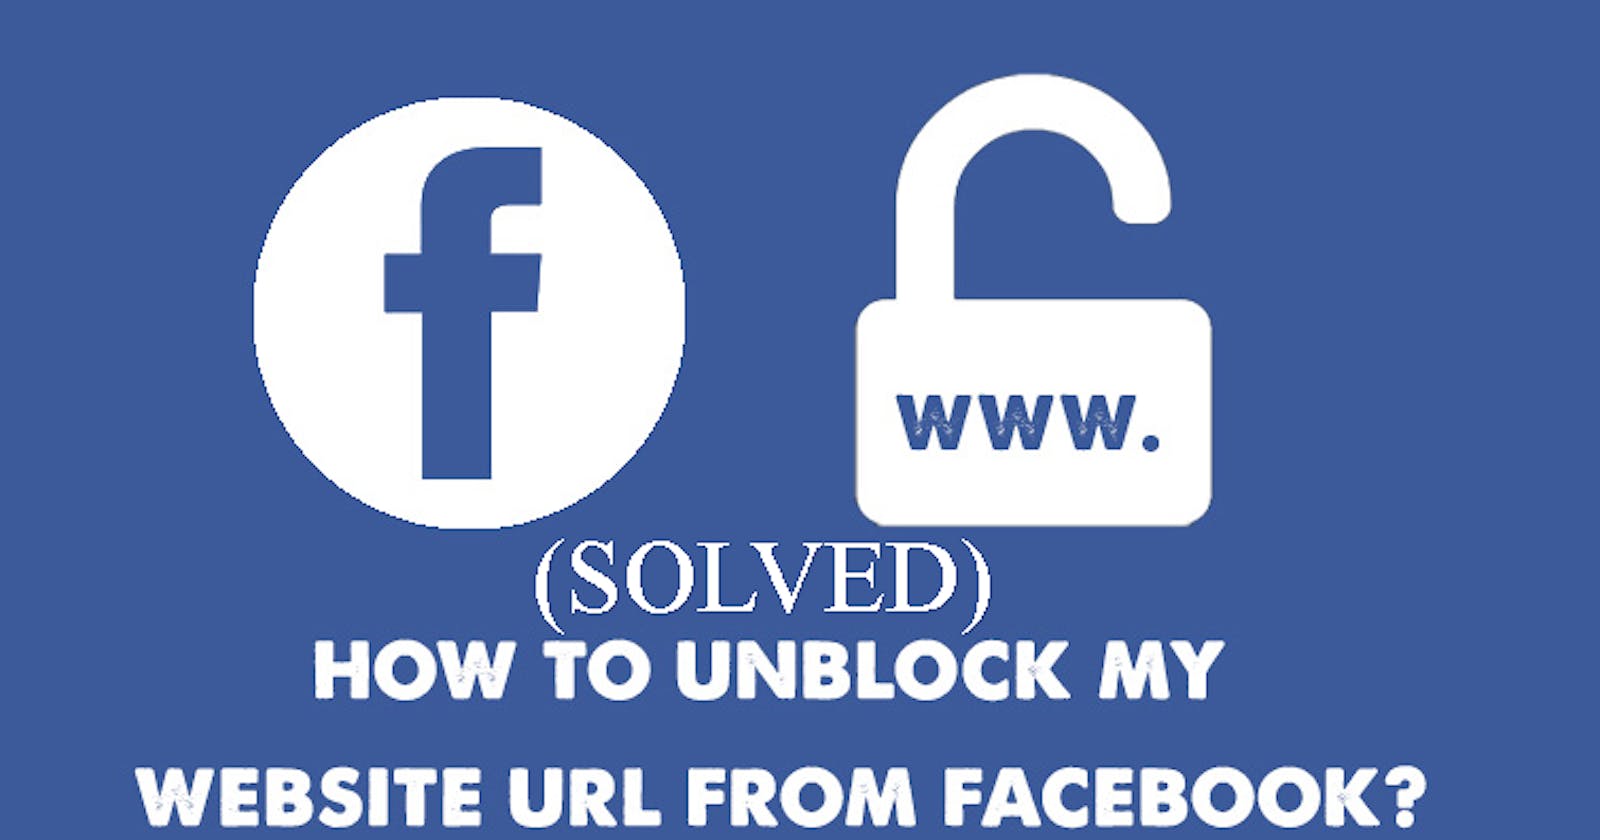 Unblock Your Website URL on Facebook Under 12 Hours